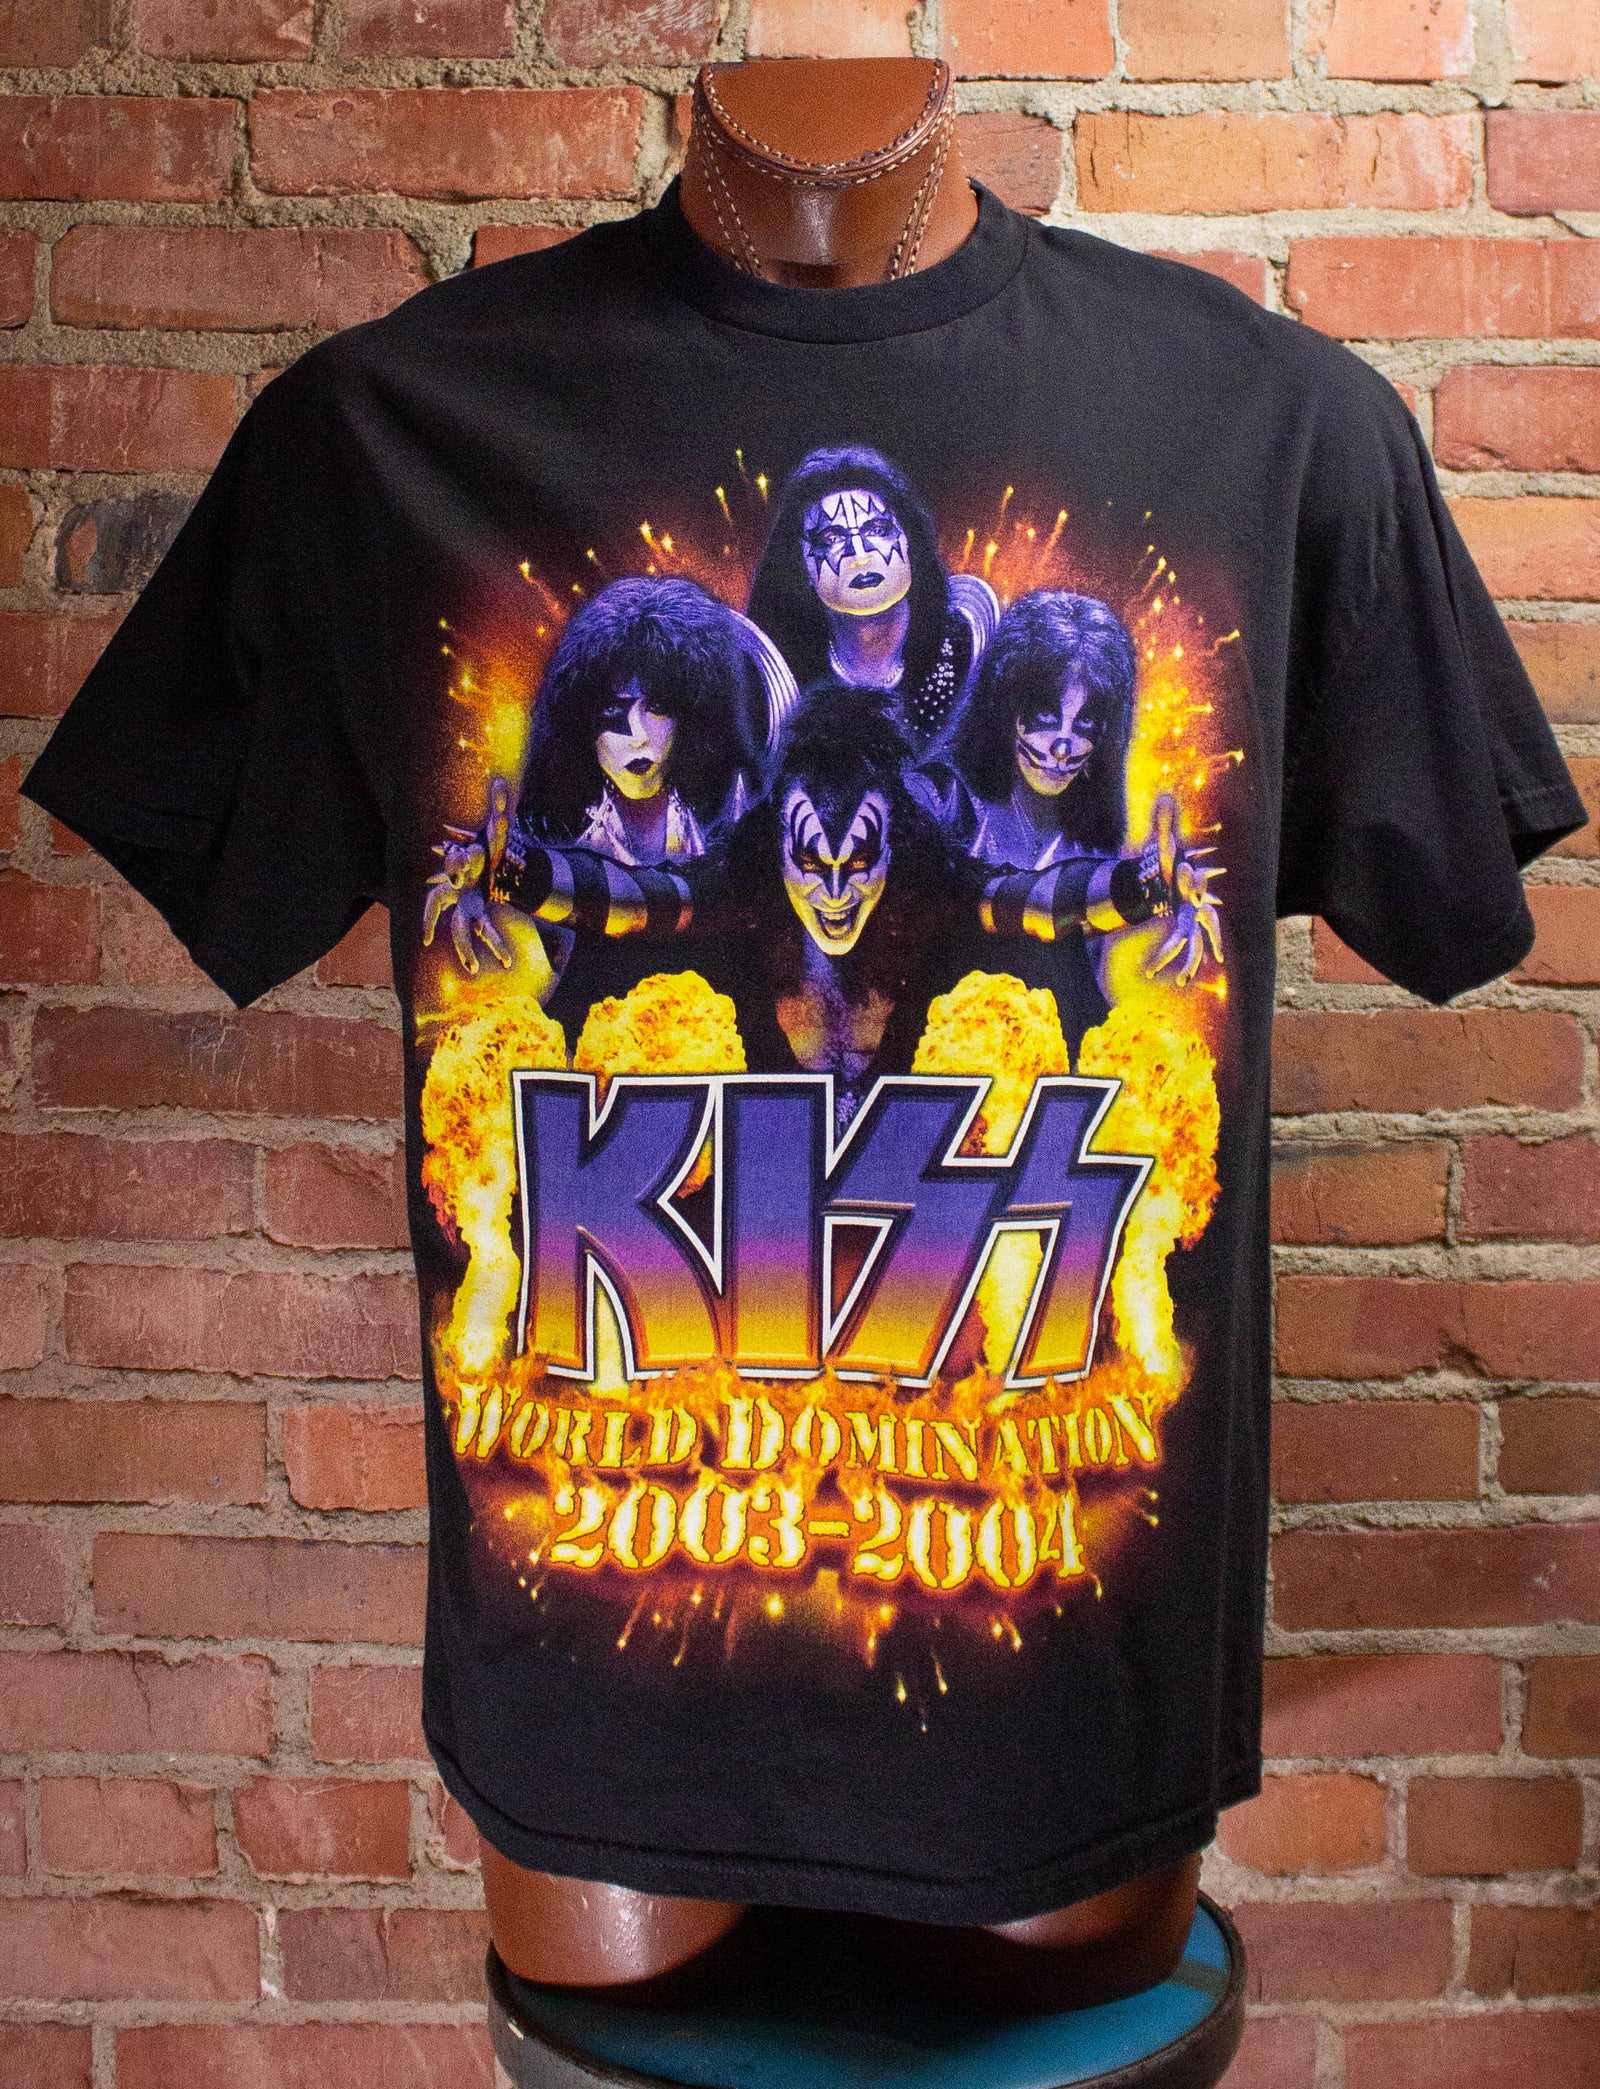 Vintage KISS World Domination Concert T-Shirt 2003-2004 L